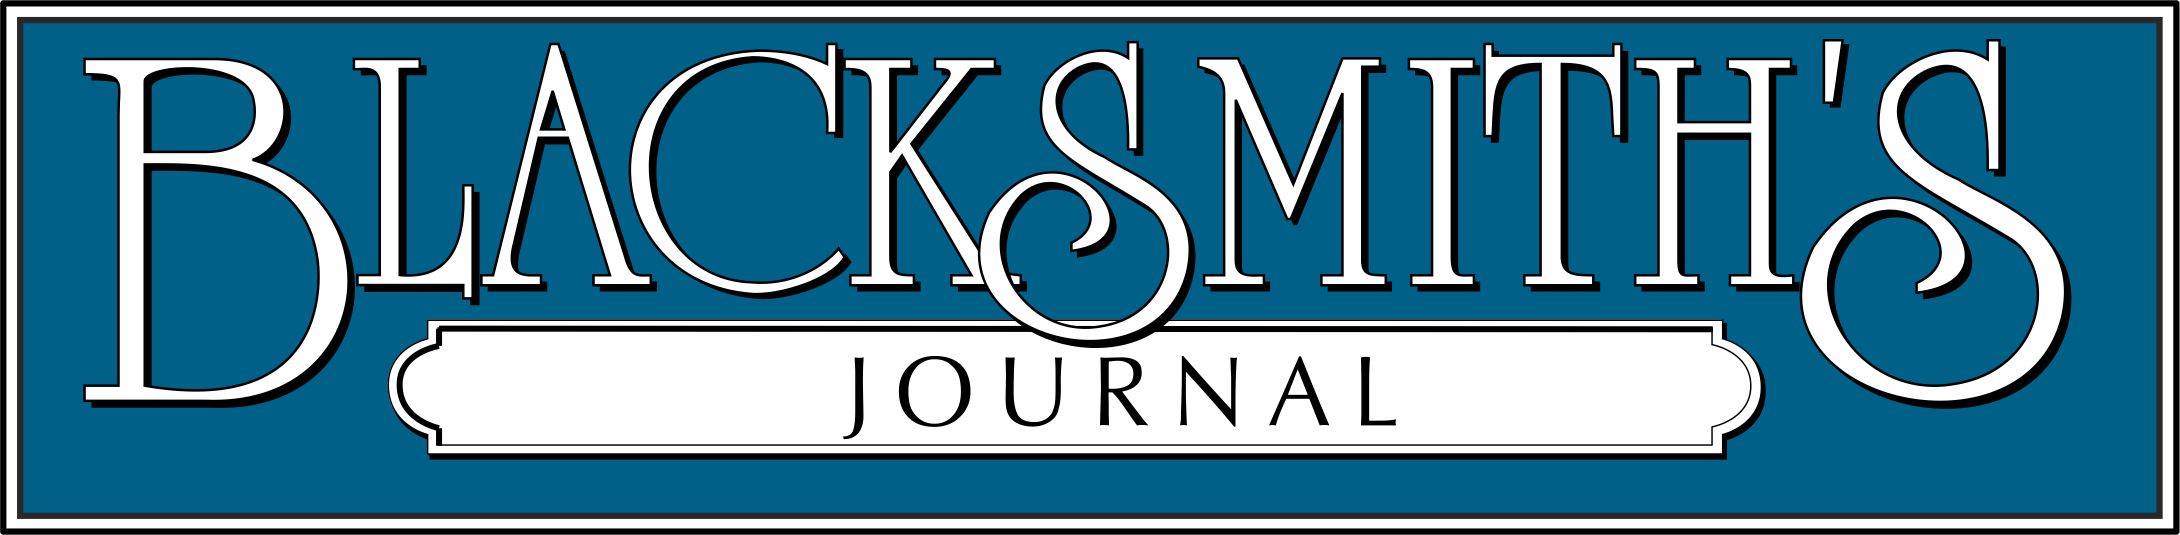 Blacksmith's Journal publication logo.